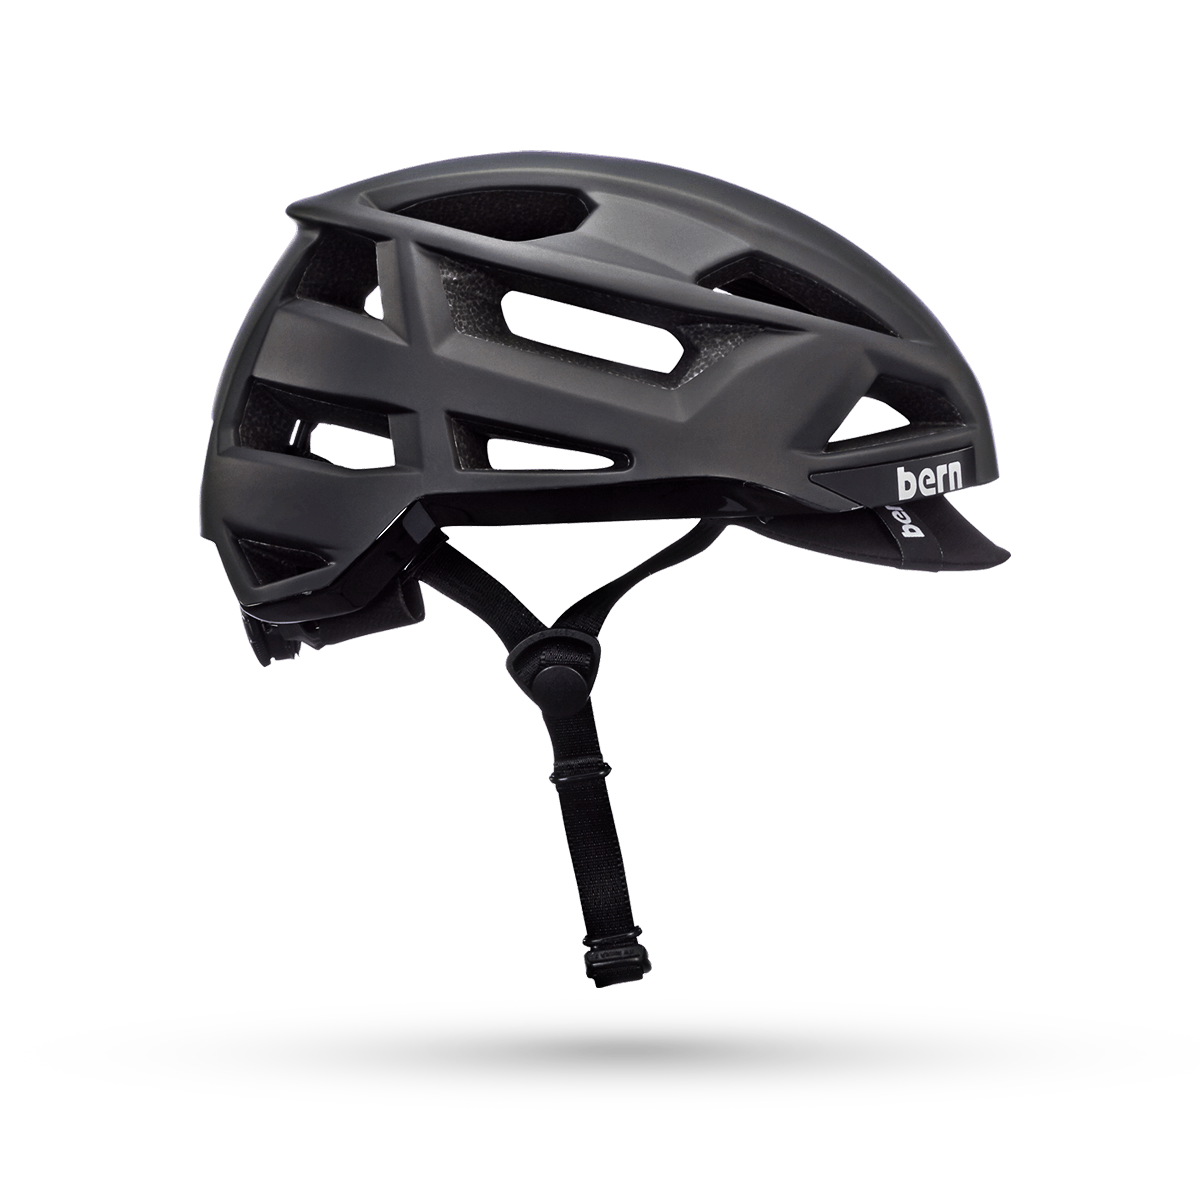 FL-1 Pave MIPS Bike Helmet (Barn Deal)